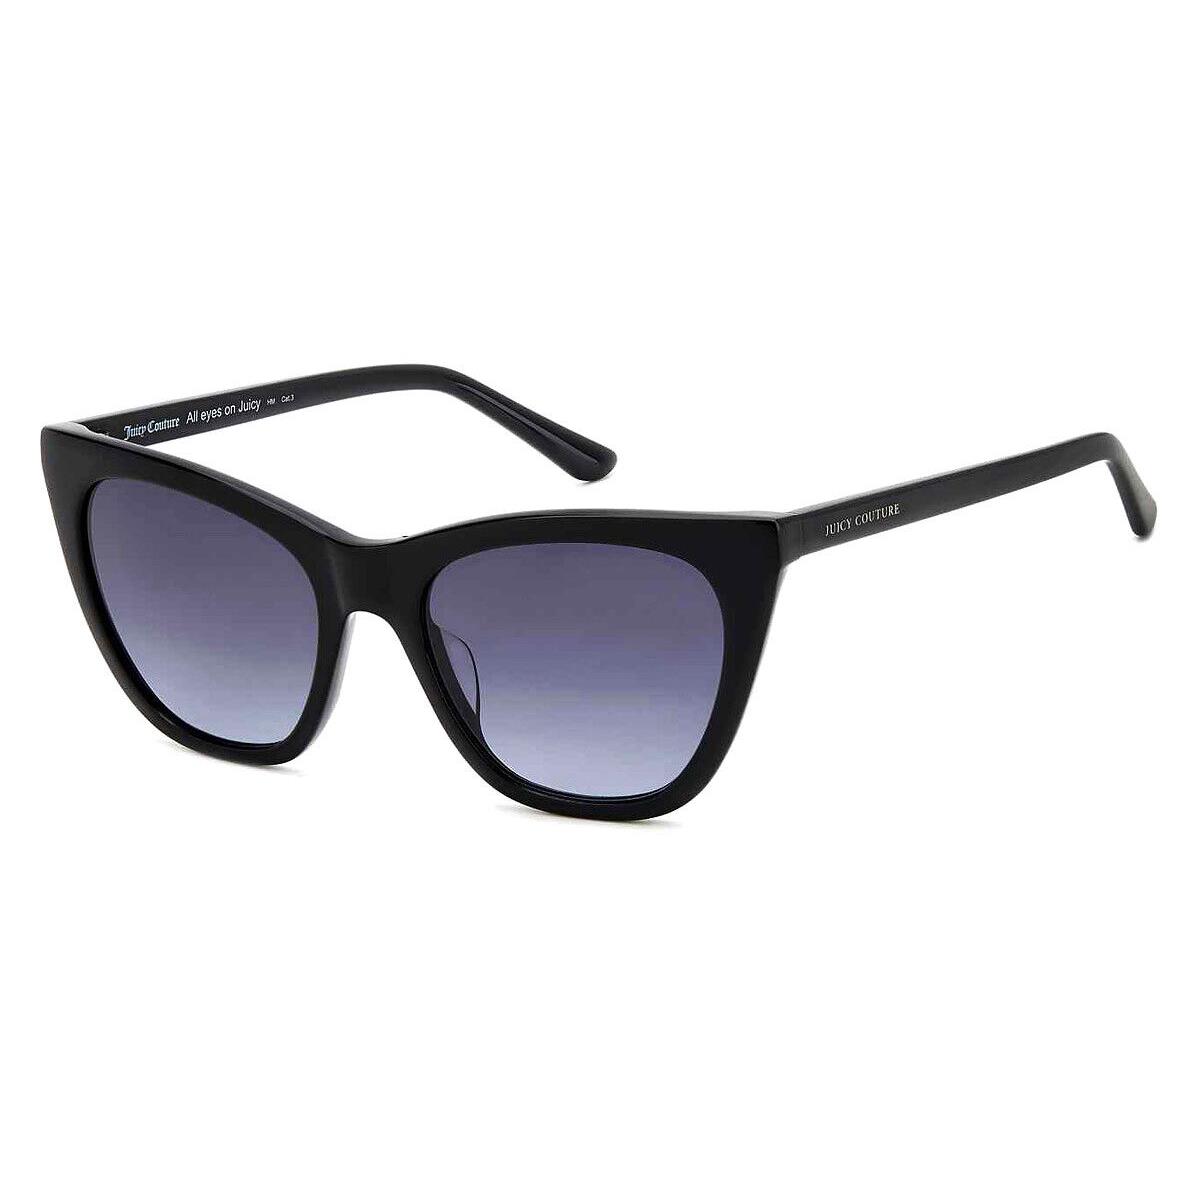 Juicy Couture Juc Sunglasses Women Black / Gray Shaded 53mm - Frame: Black / Gray Shaded, Lens: Gray Shaded